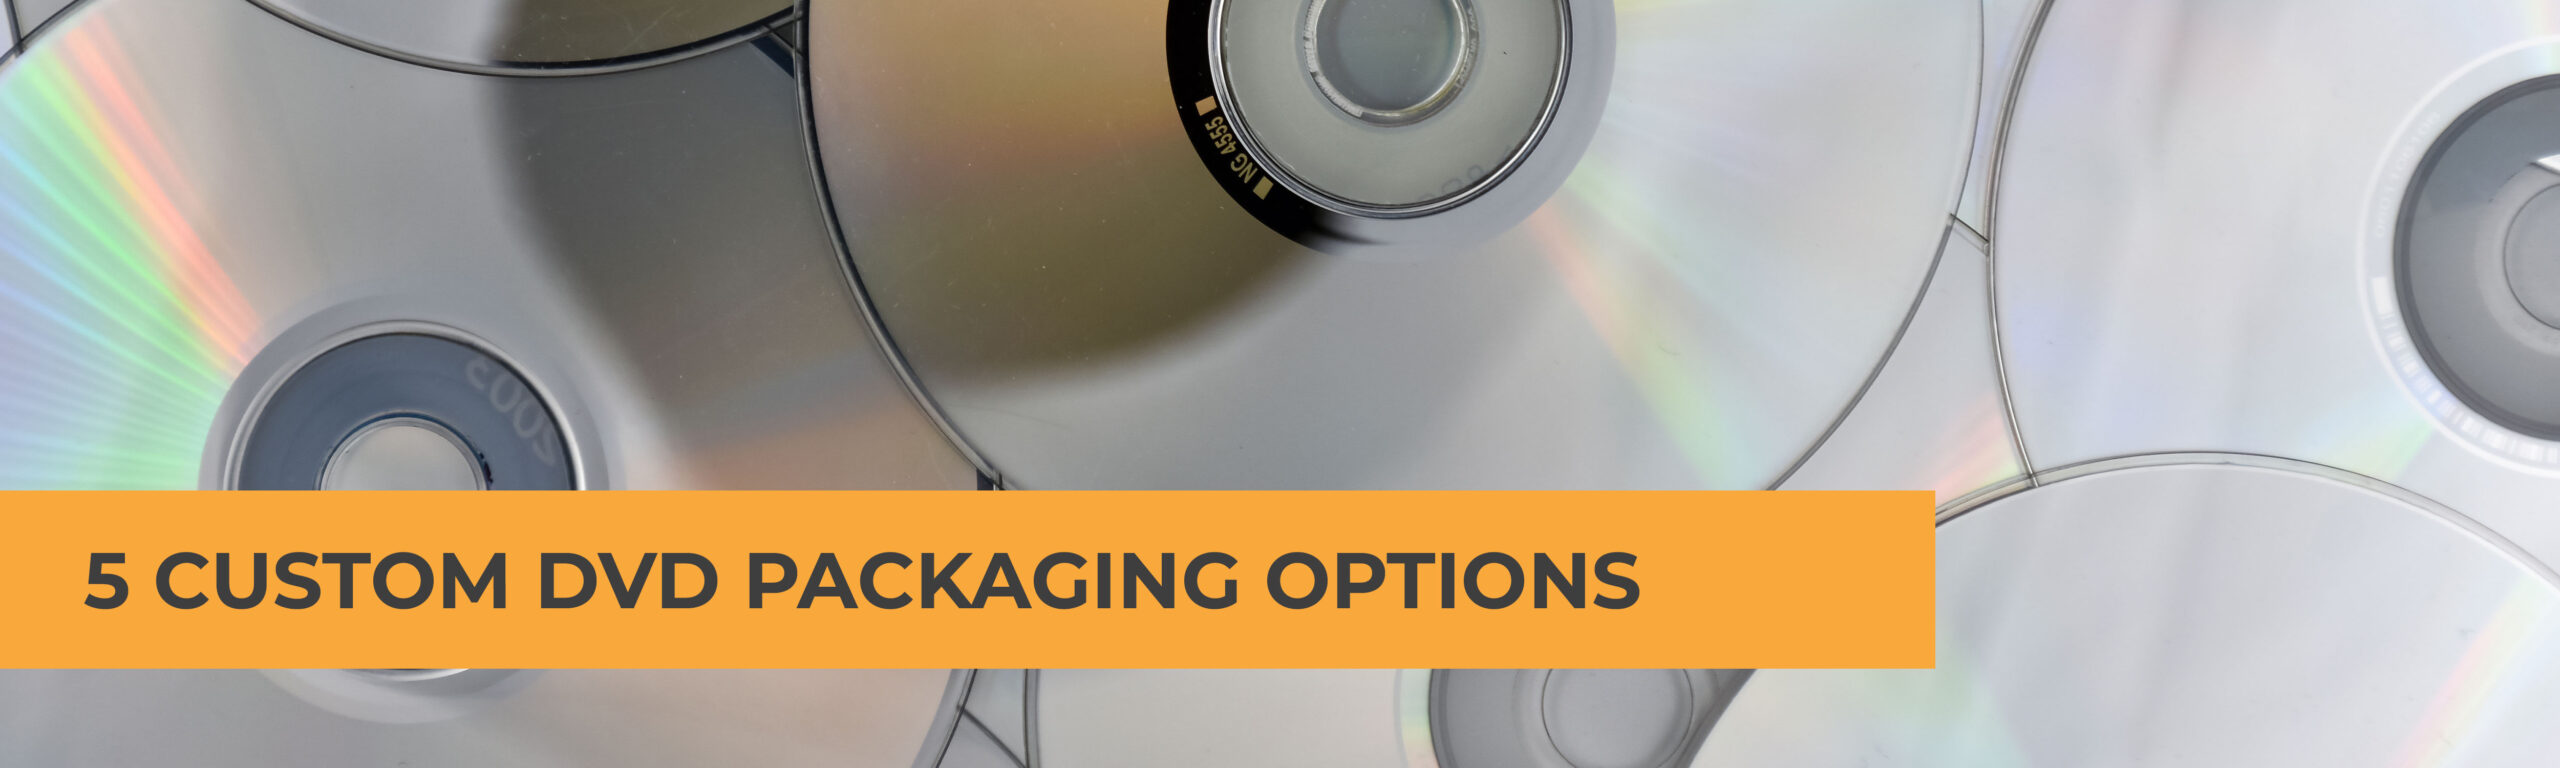 5 Custom DVD Packaging Options